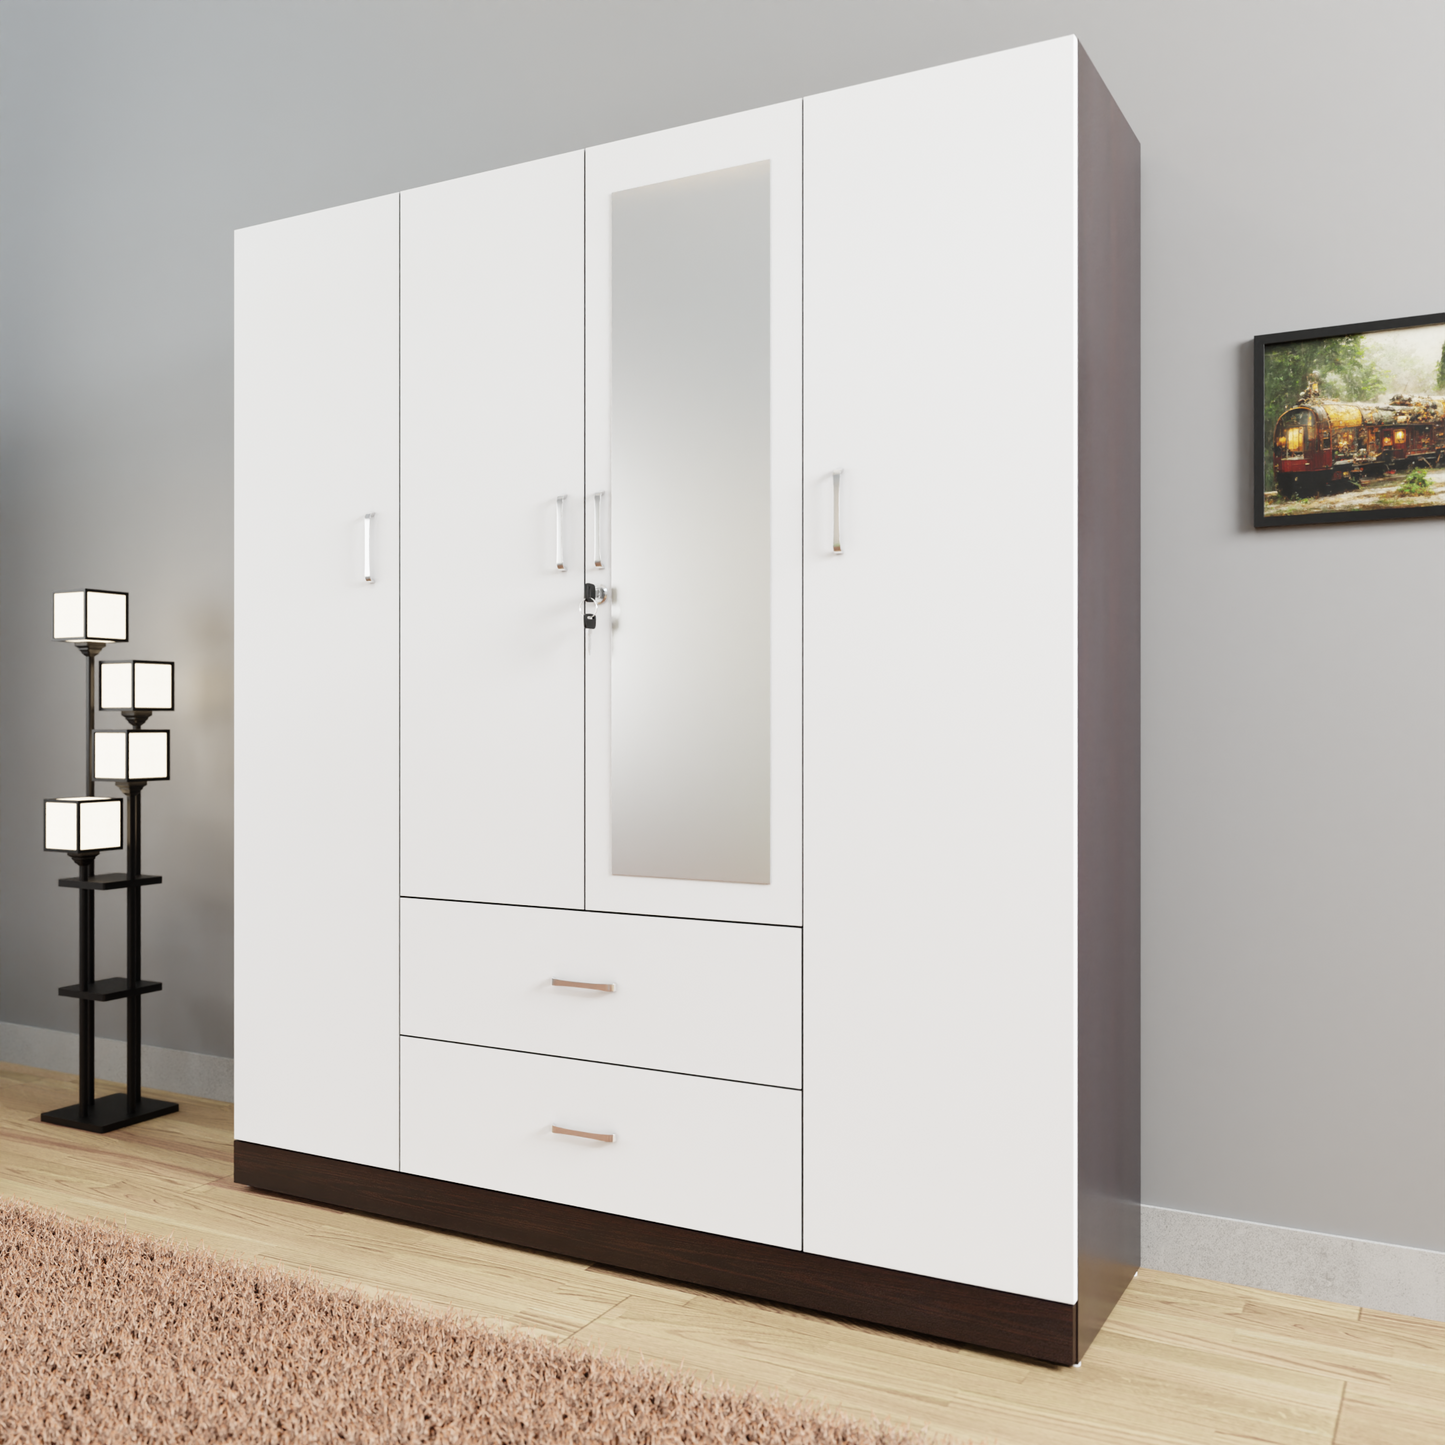 AVIRA |Wardrobe with Mirror, Hinged | 4 Door, 2 Drawer & Dual Color Wardrobes VIKI FURNITURE Dark Wenge & Frosty White  